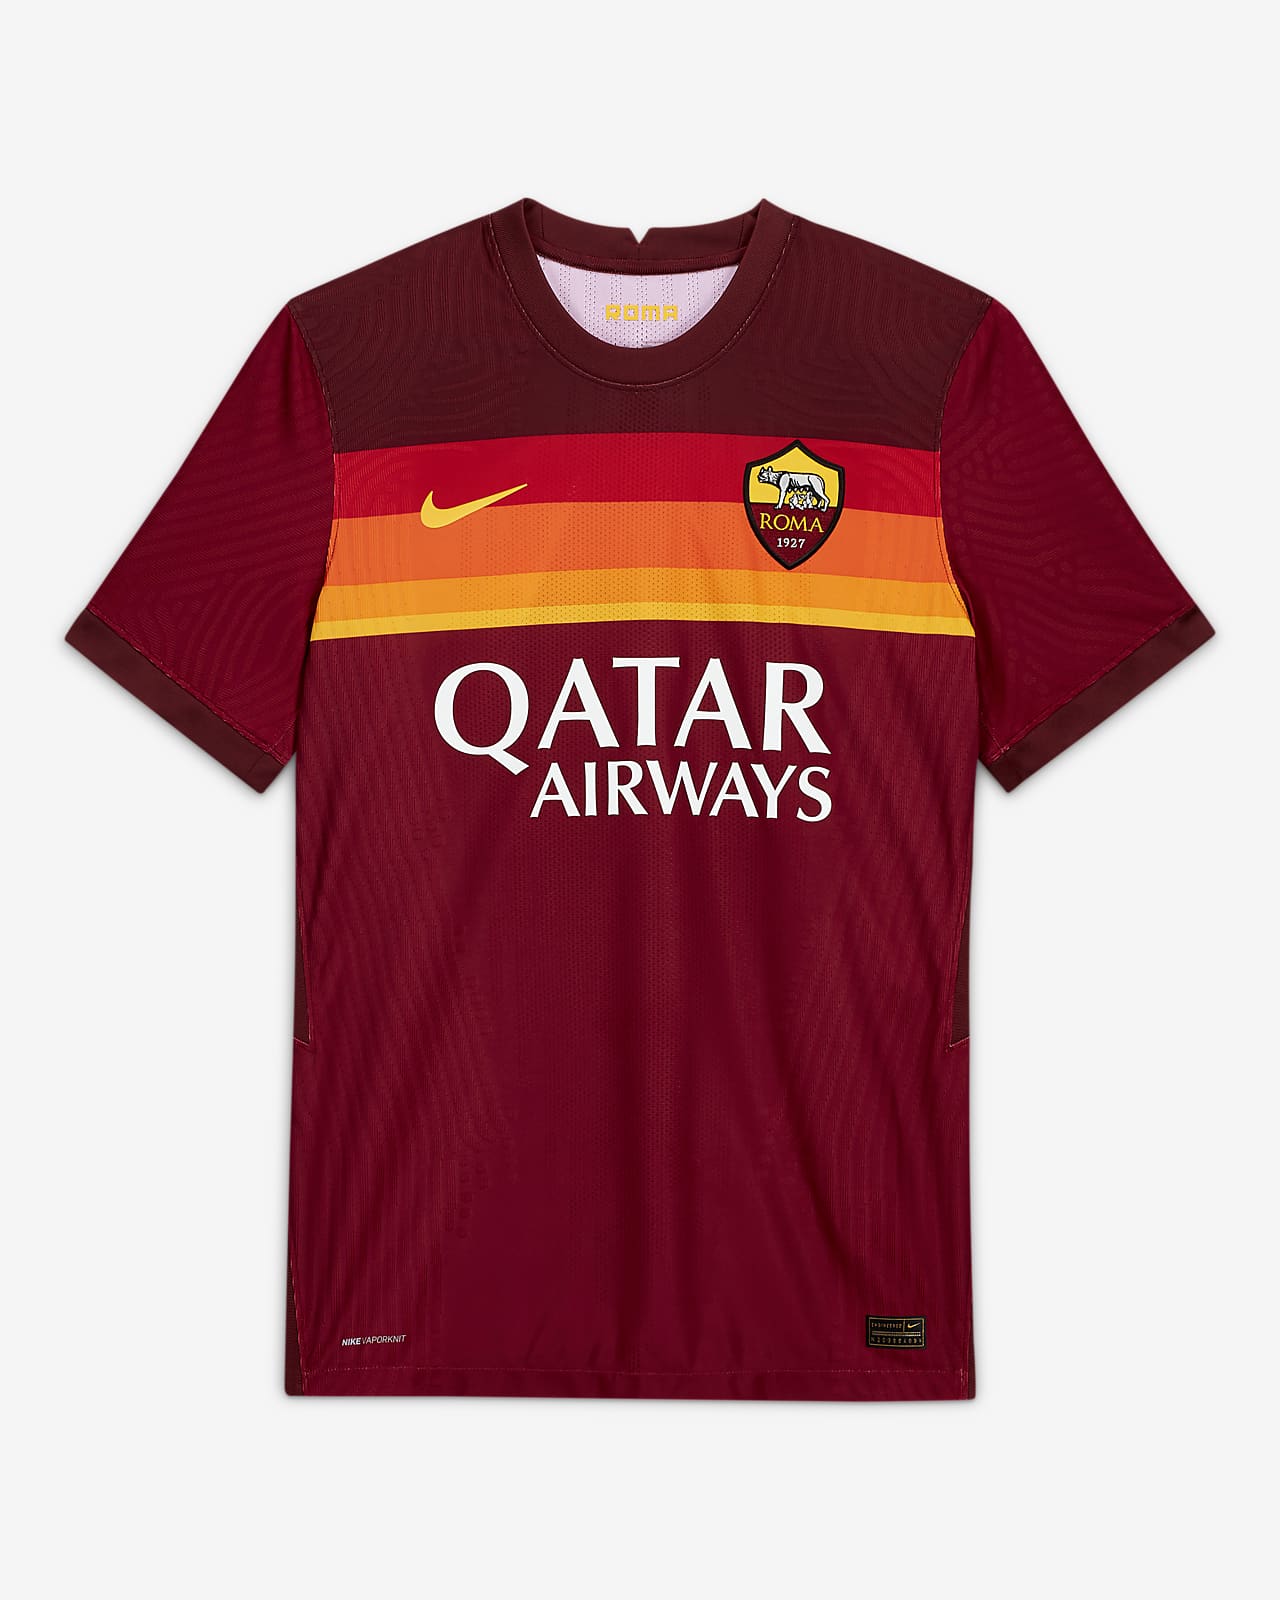 AS Roma 2020-21 Nike Home Kit | 20/21 Kits | Football shirt blog